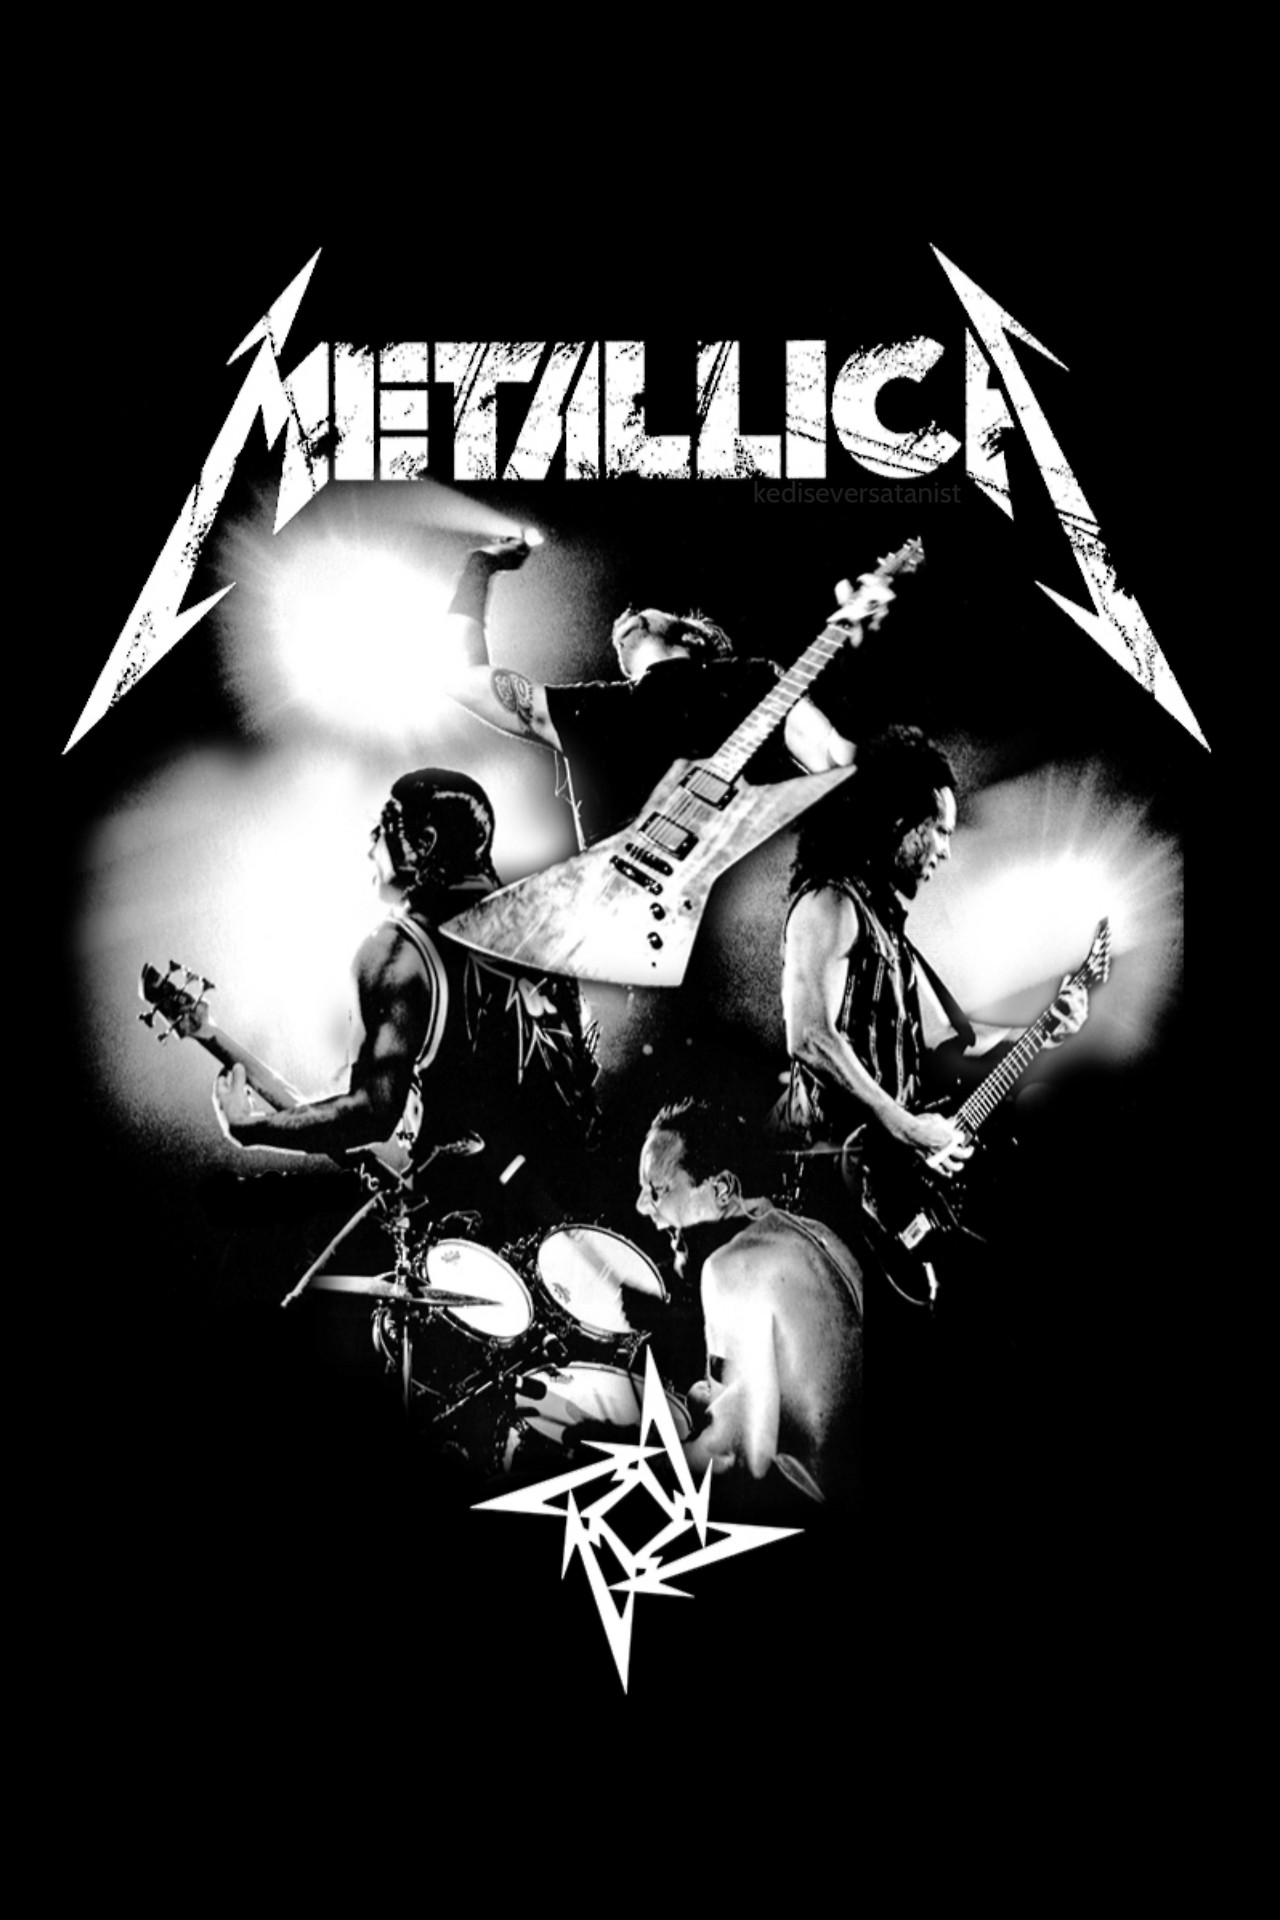 Metallica Ride the Lightning Wallpaper 62+ images